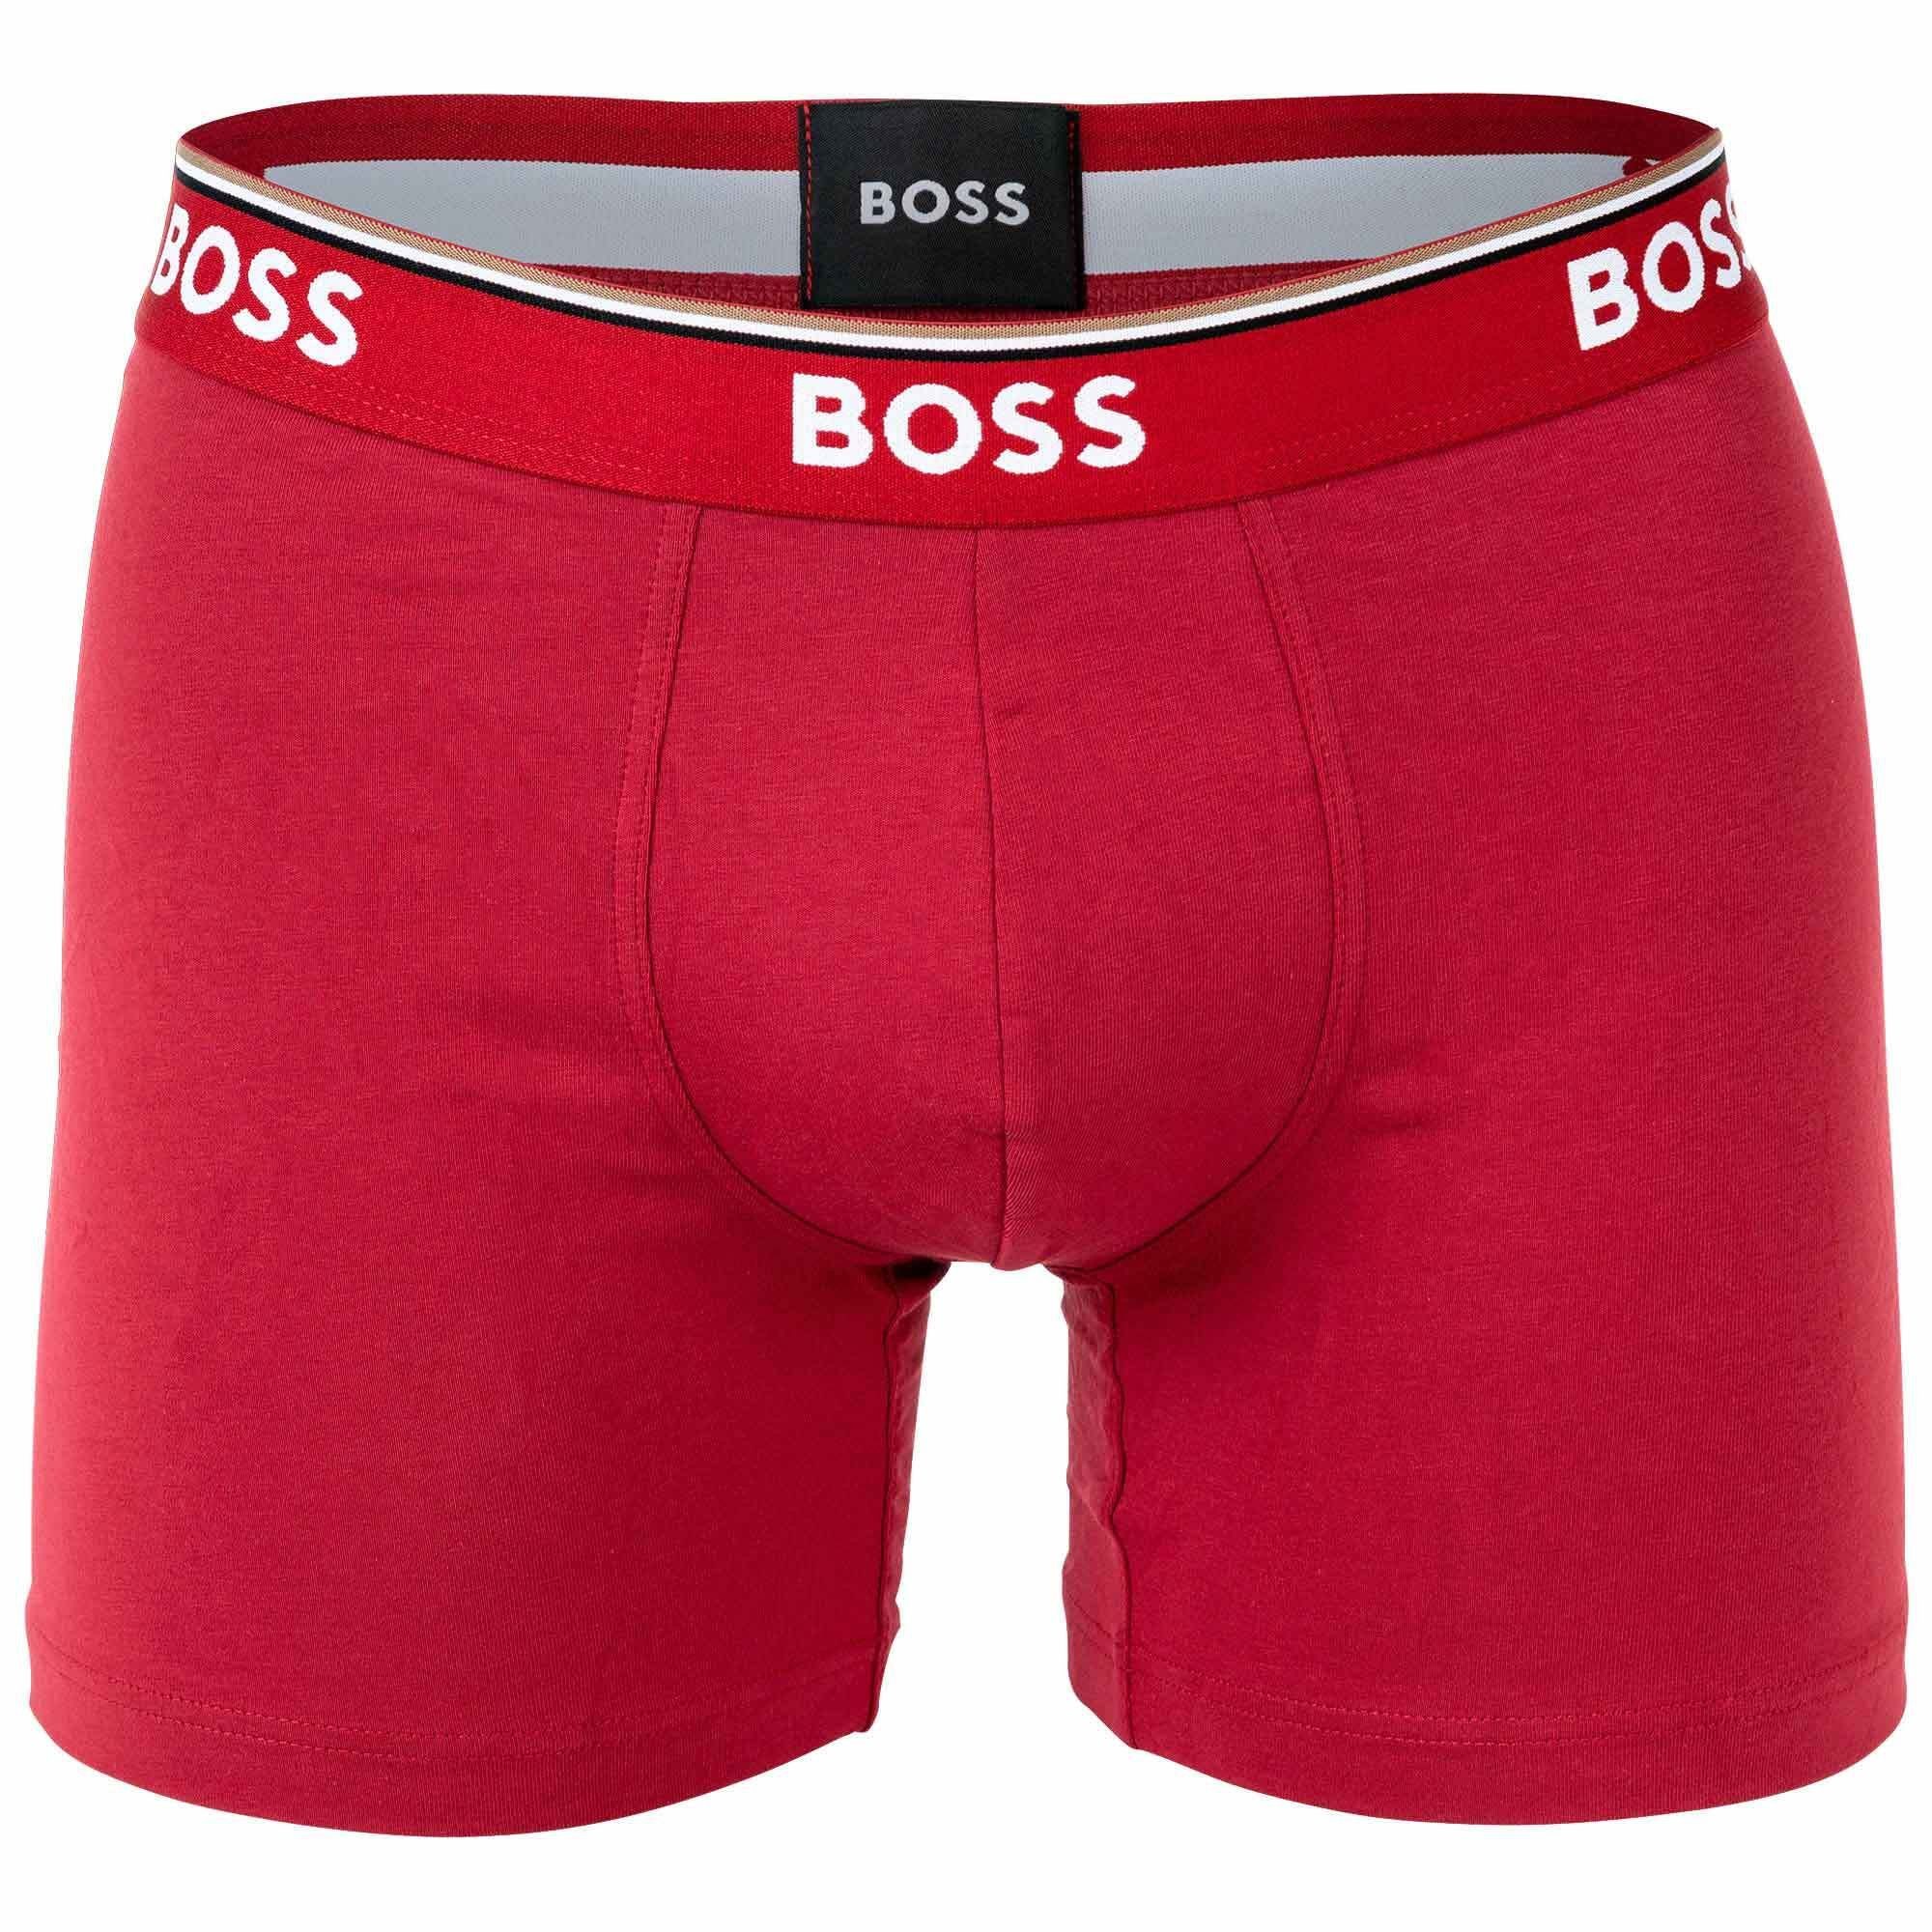 BOSS Boxer Herren Boxershorts, 6er Briefs - Rot/Blau/Schwarz 6P Pack Boxer